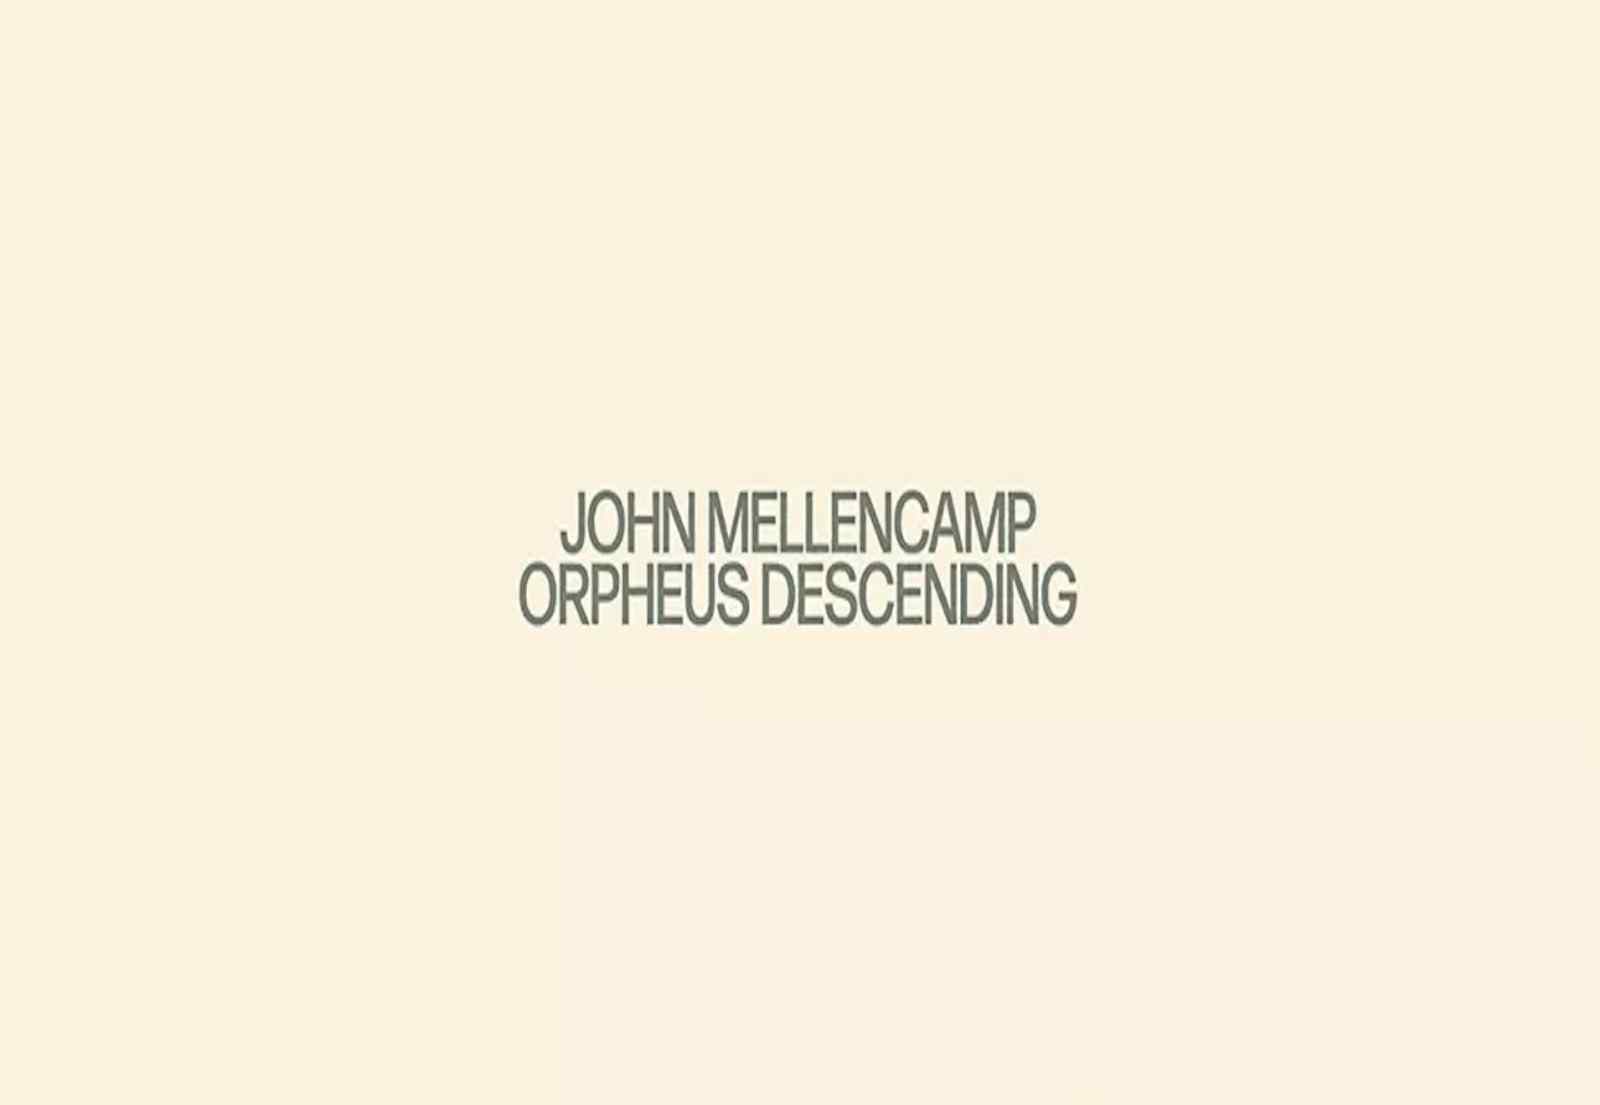 Classic Rock: John Mellencamp weaves deft, weary tales on the elegant Orpheus Descending